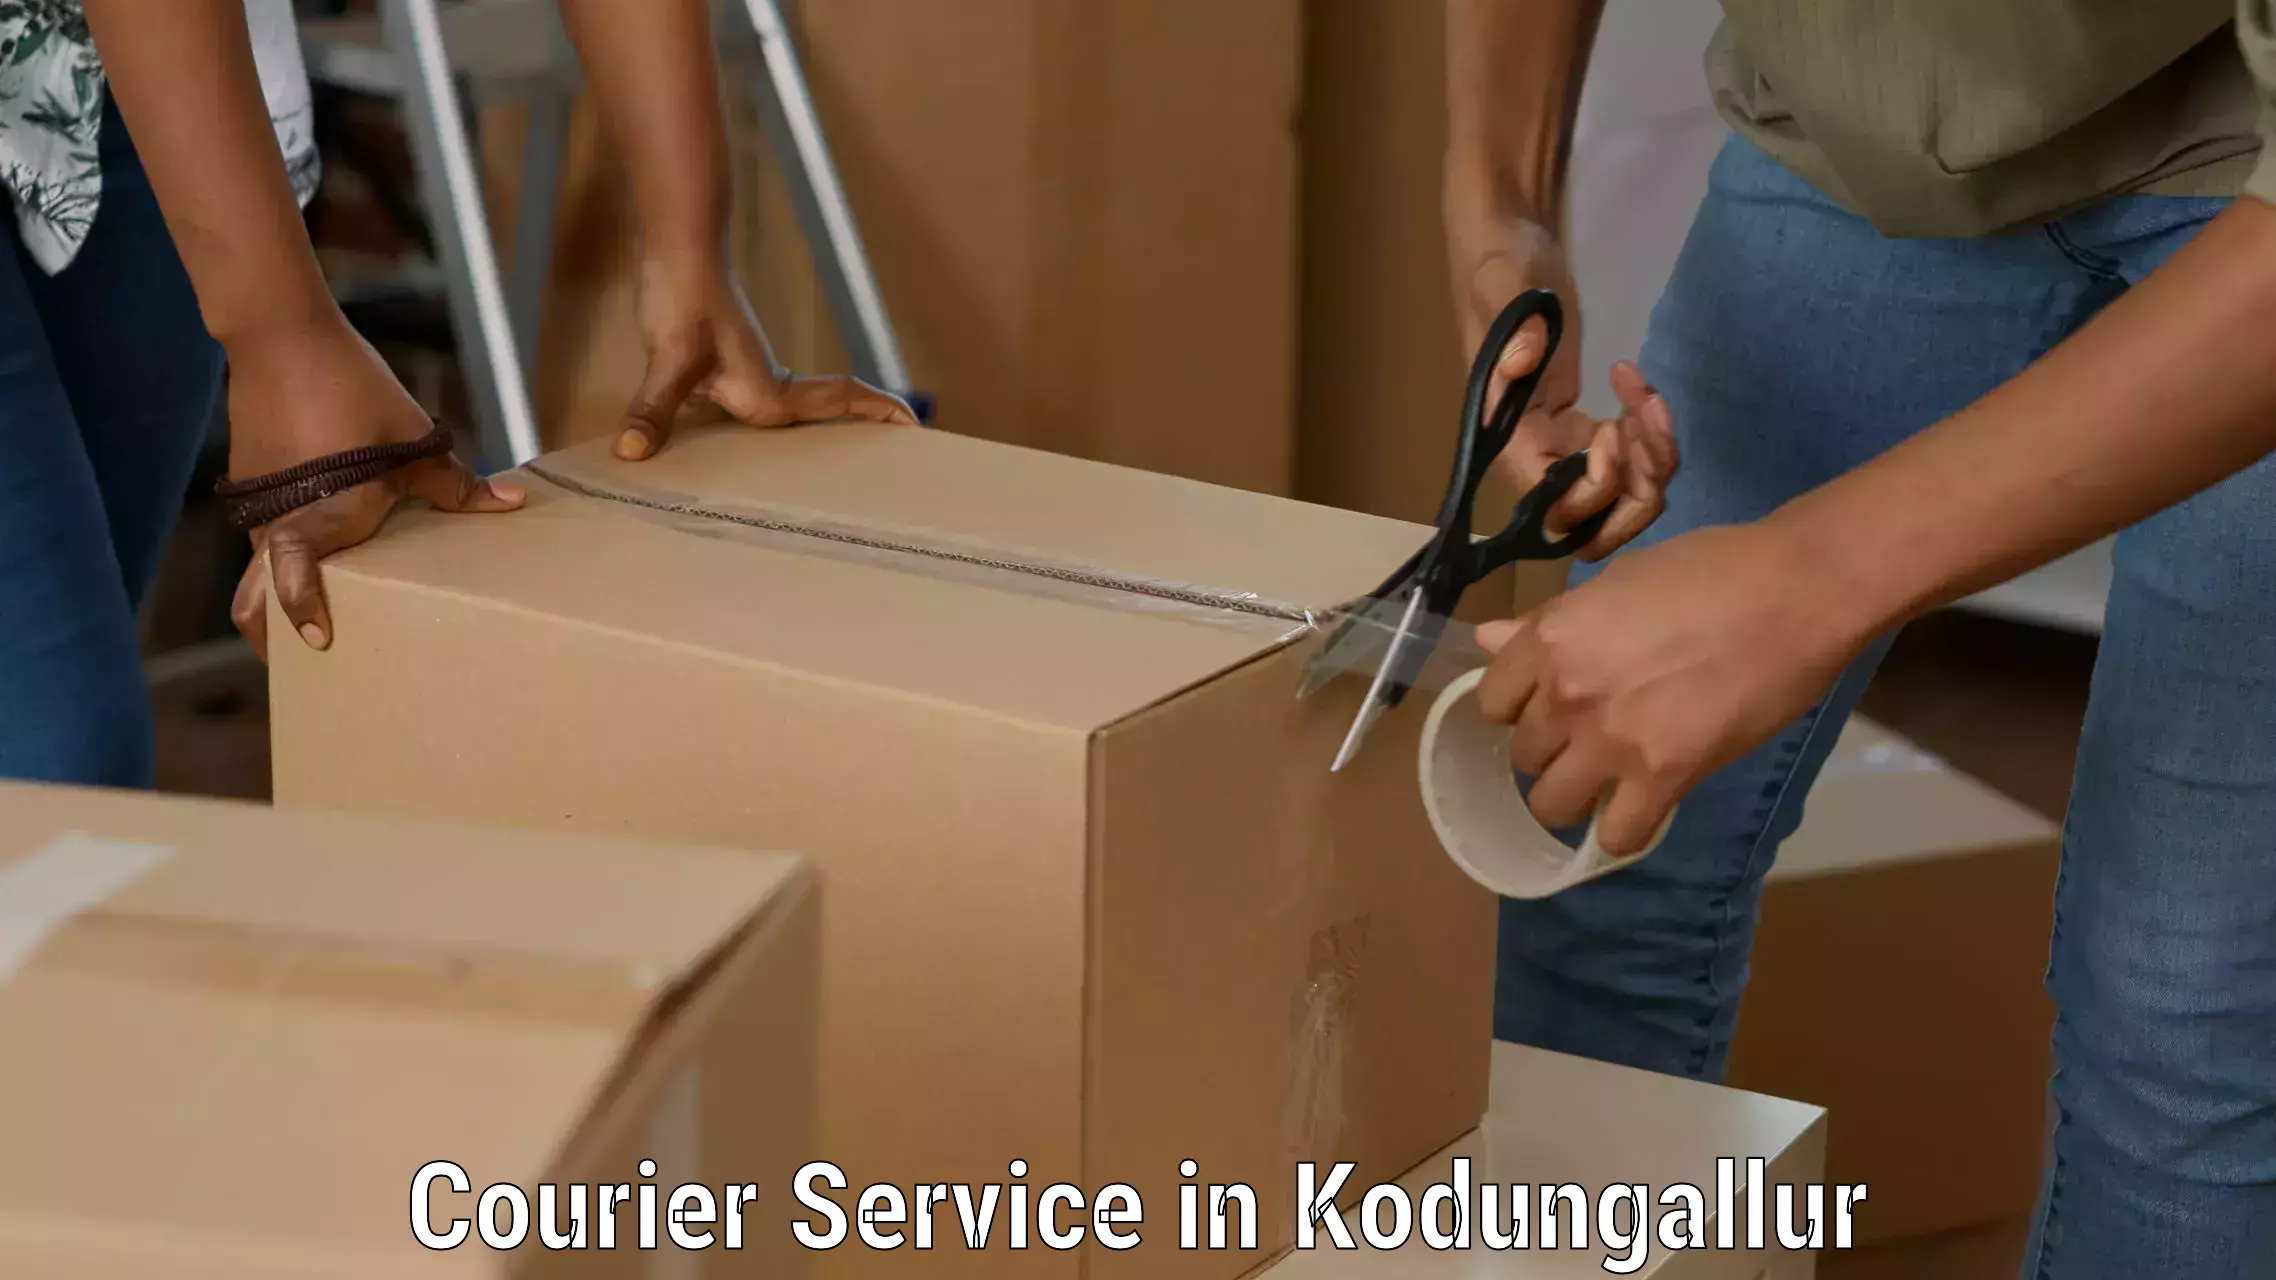 Courier service comparison in Kodungallur